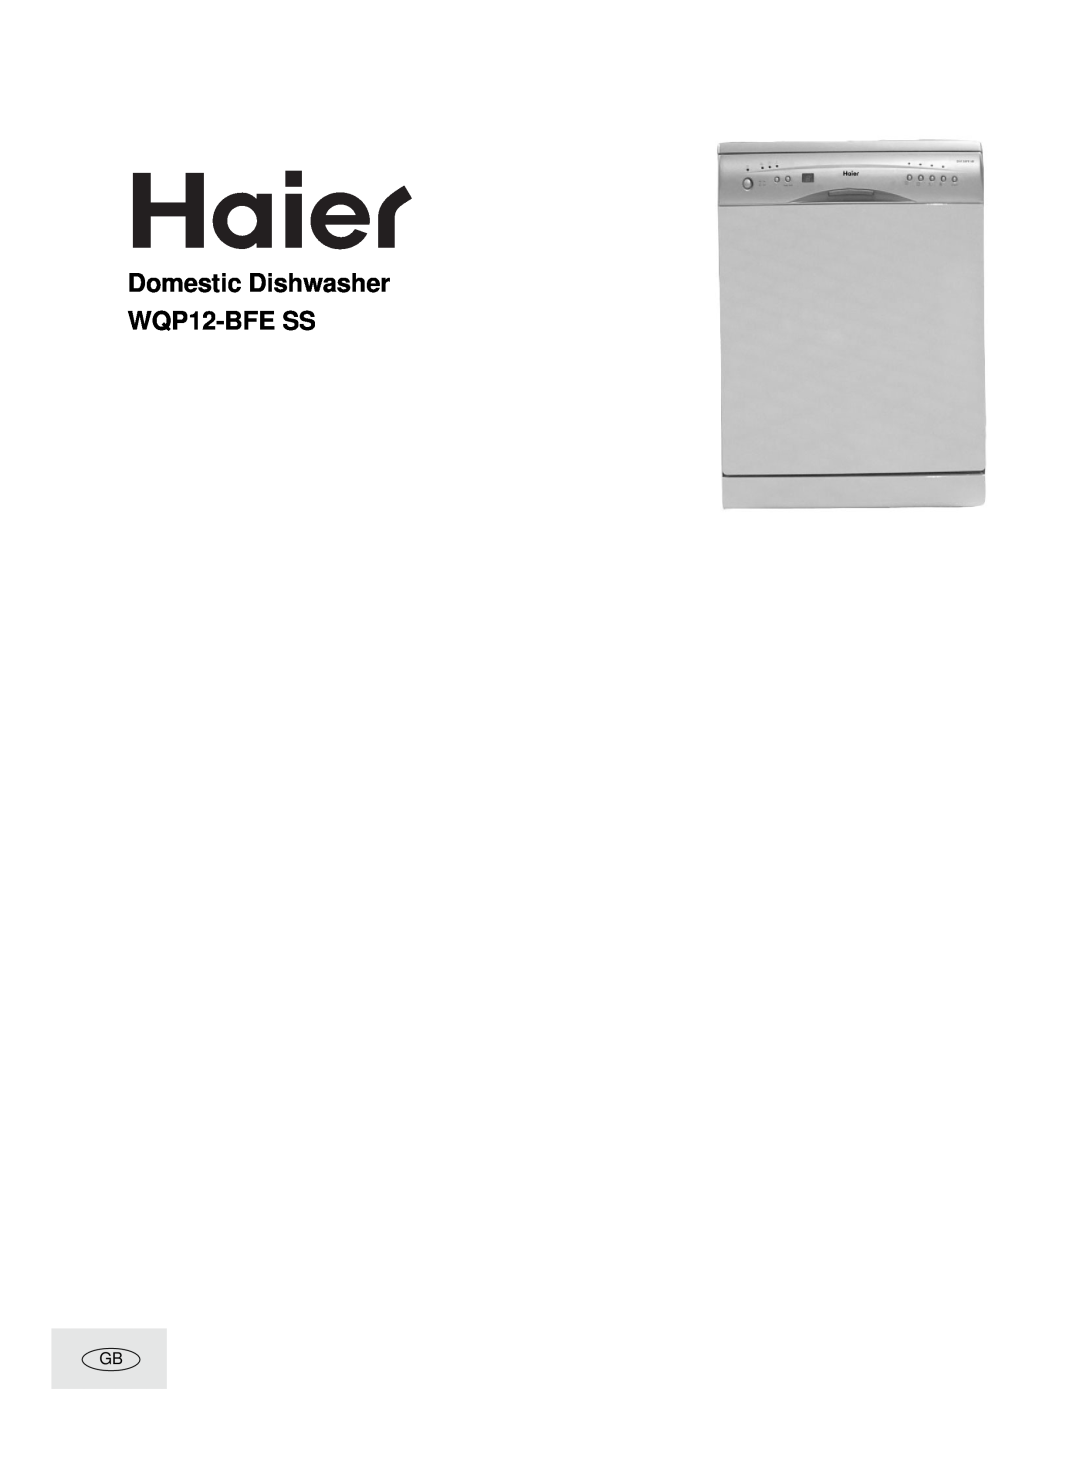 Haier manual Domestic Dishwasher WQP12-BFE SS 